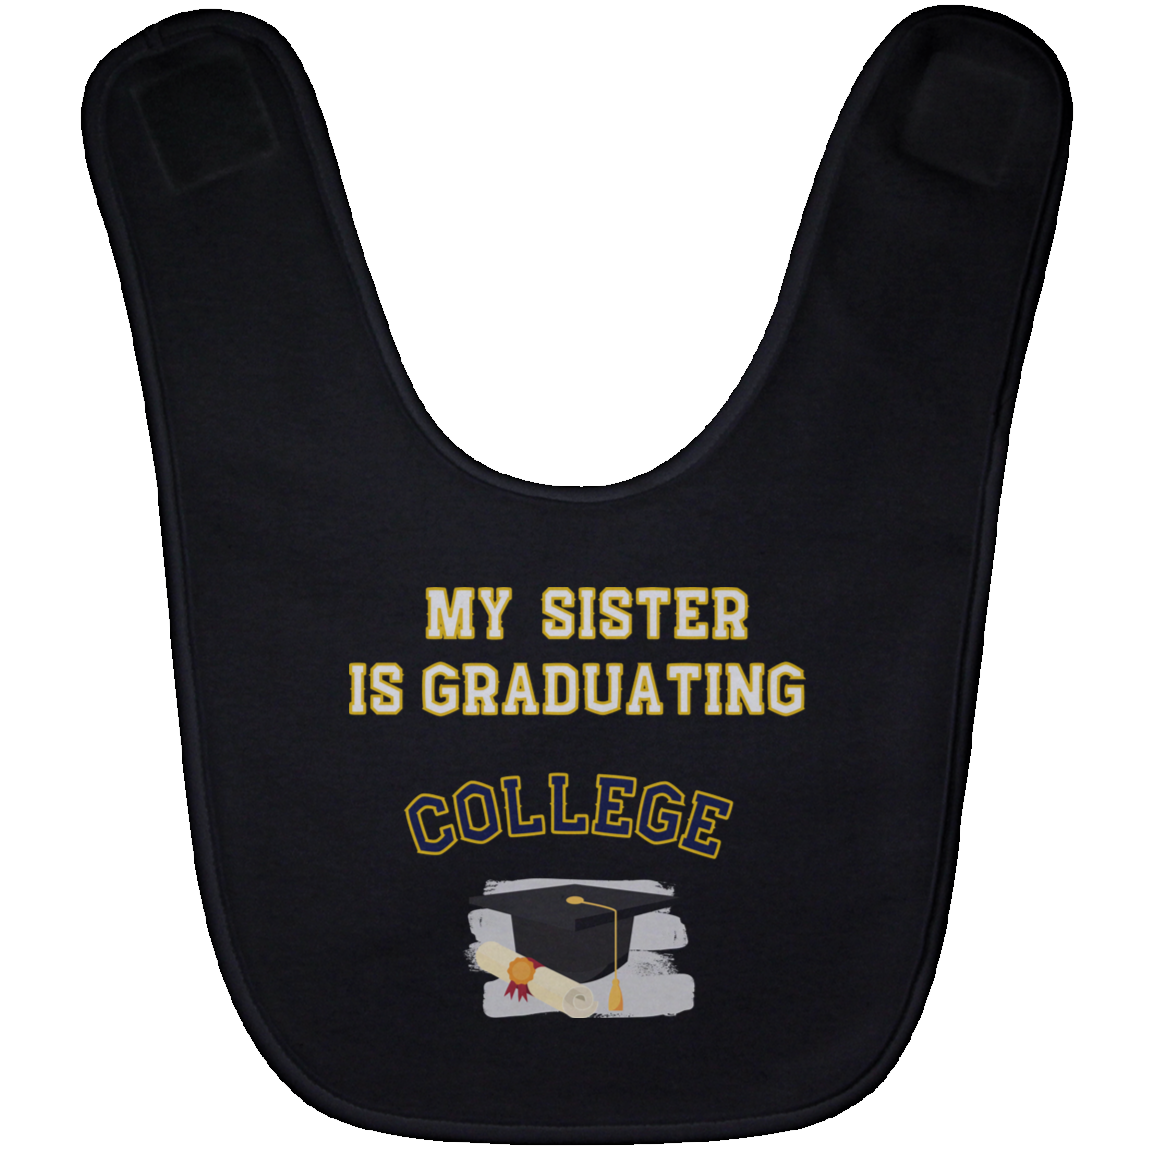 My sister is graduating College bib